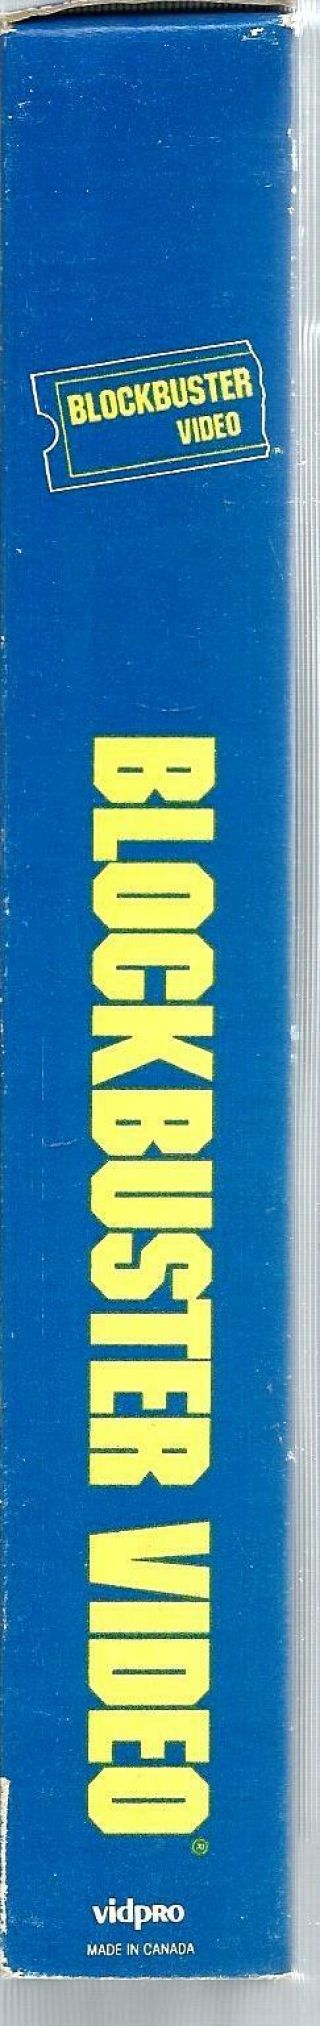 Thief of Hearts VHS 1985 Steven Bauer David Caruso Blockbuster Video Cover VTG 3